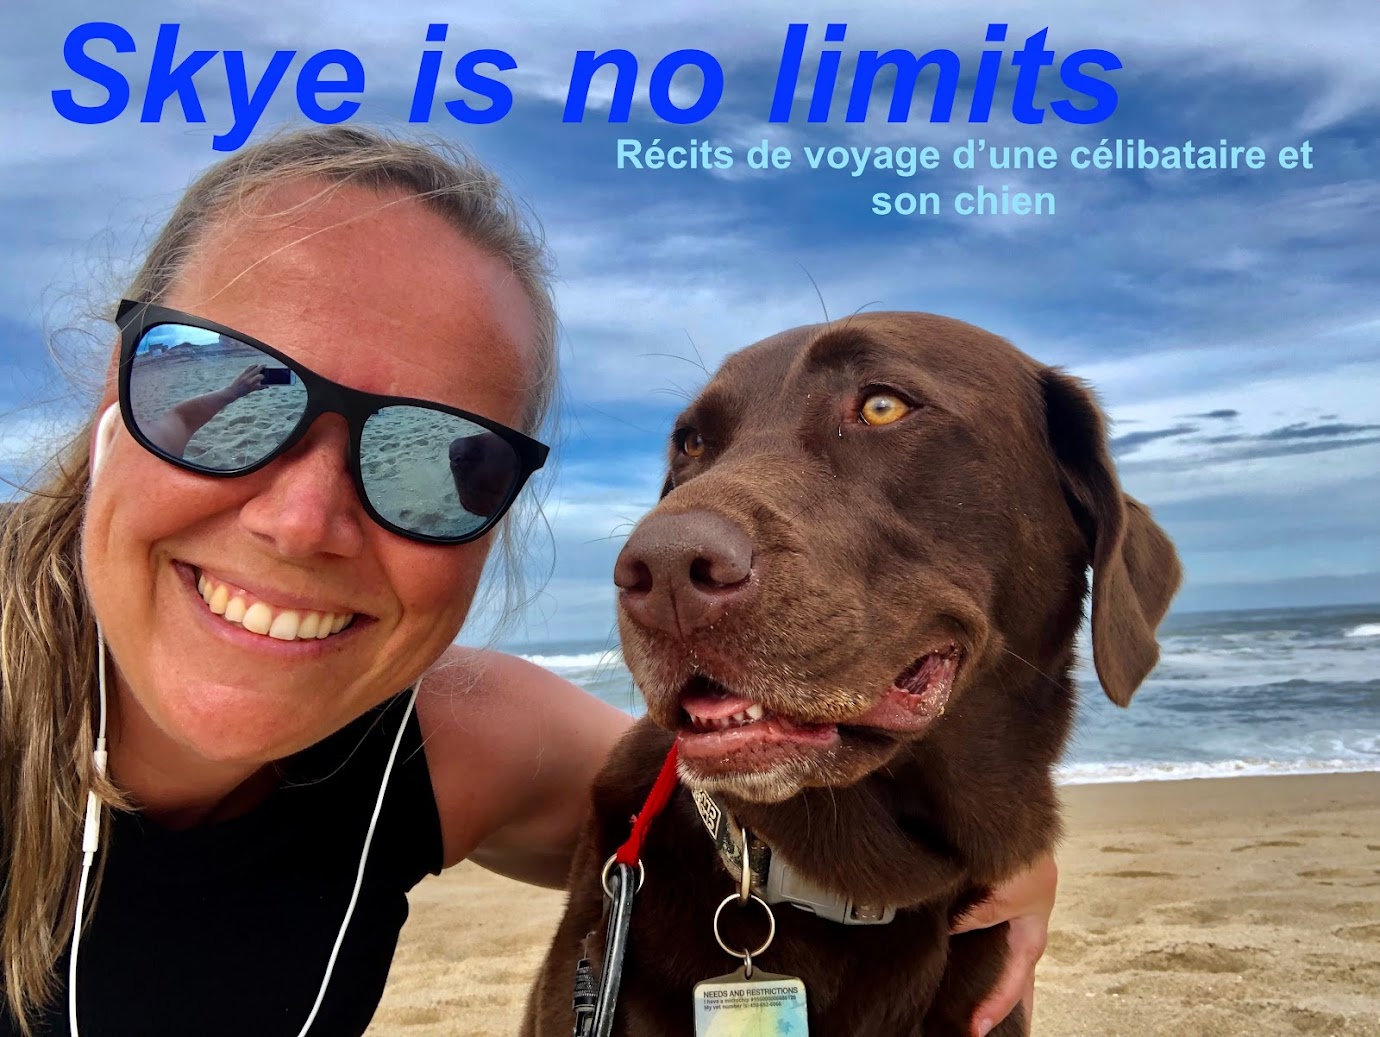 Skye is no limits